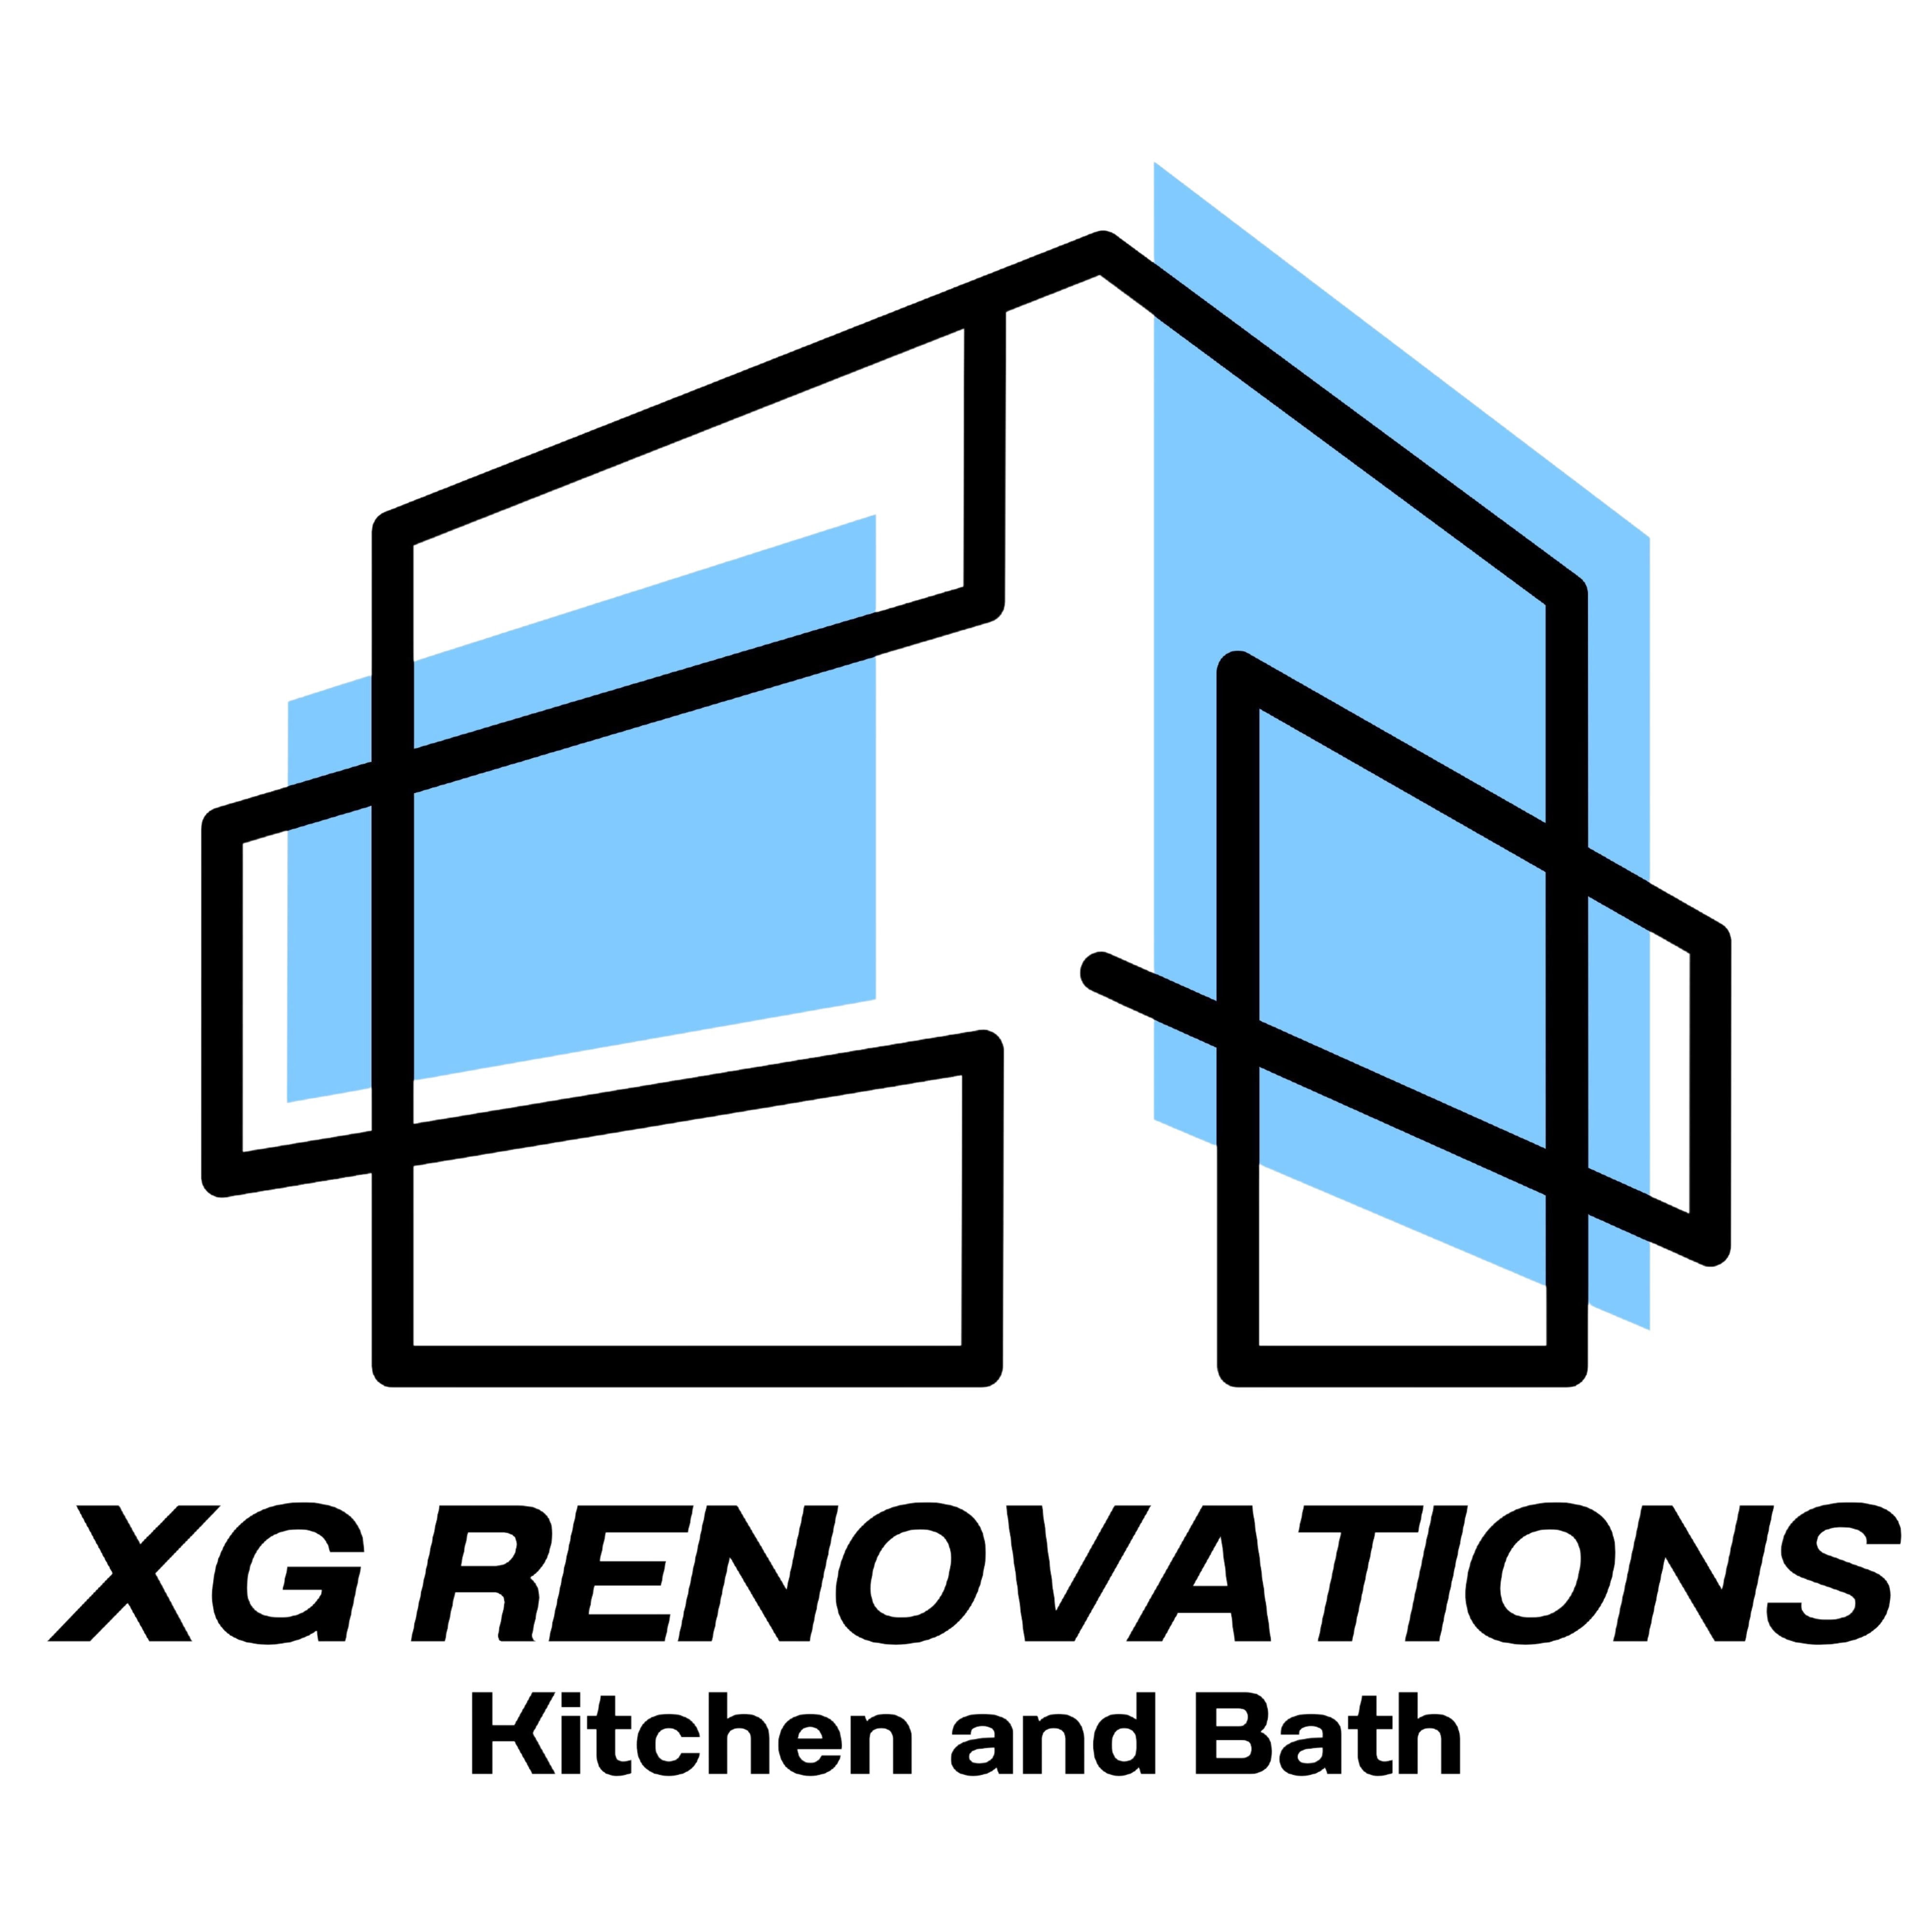 XG Renovations - Kitchen and Bath's logo